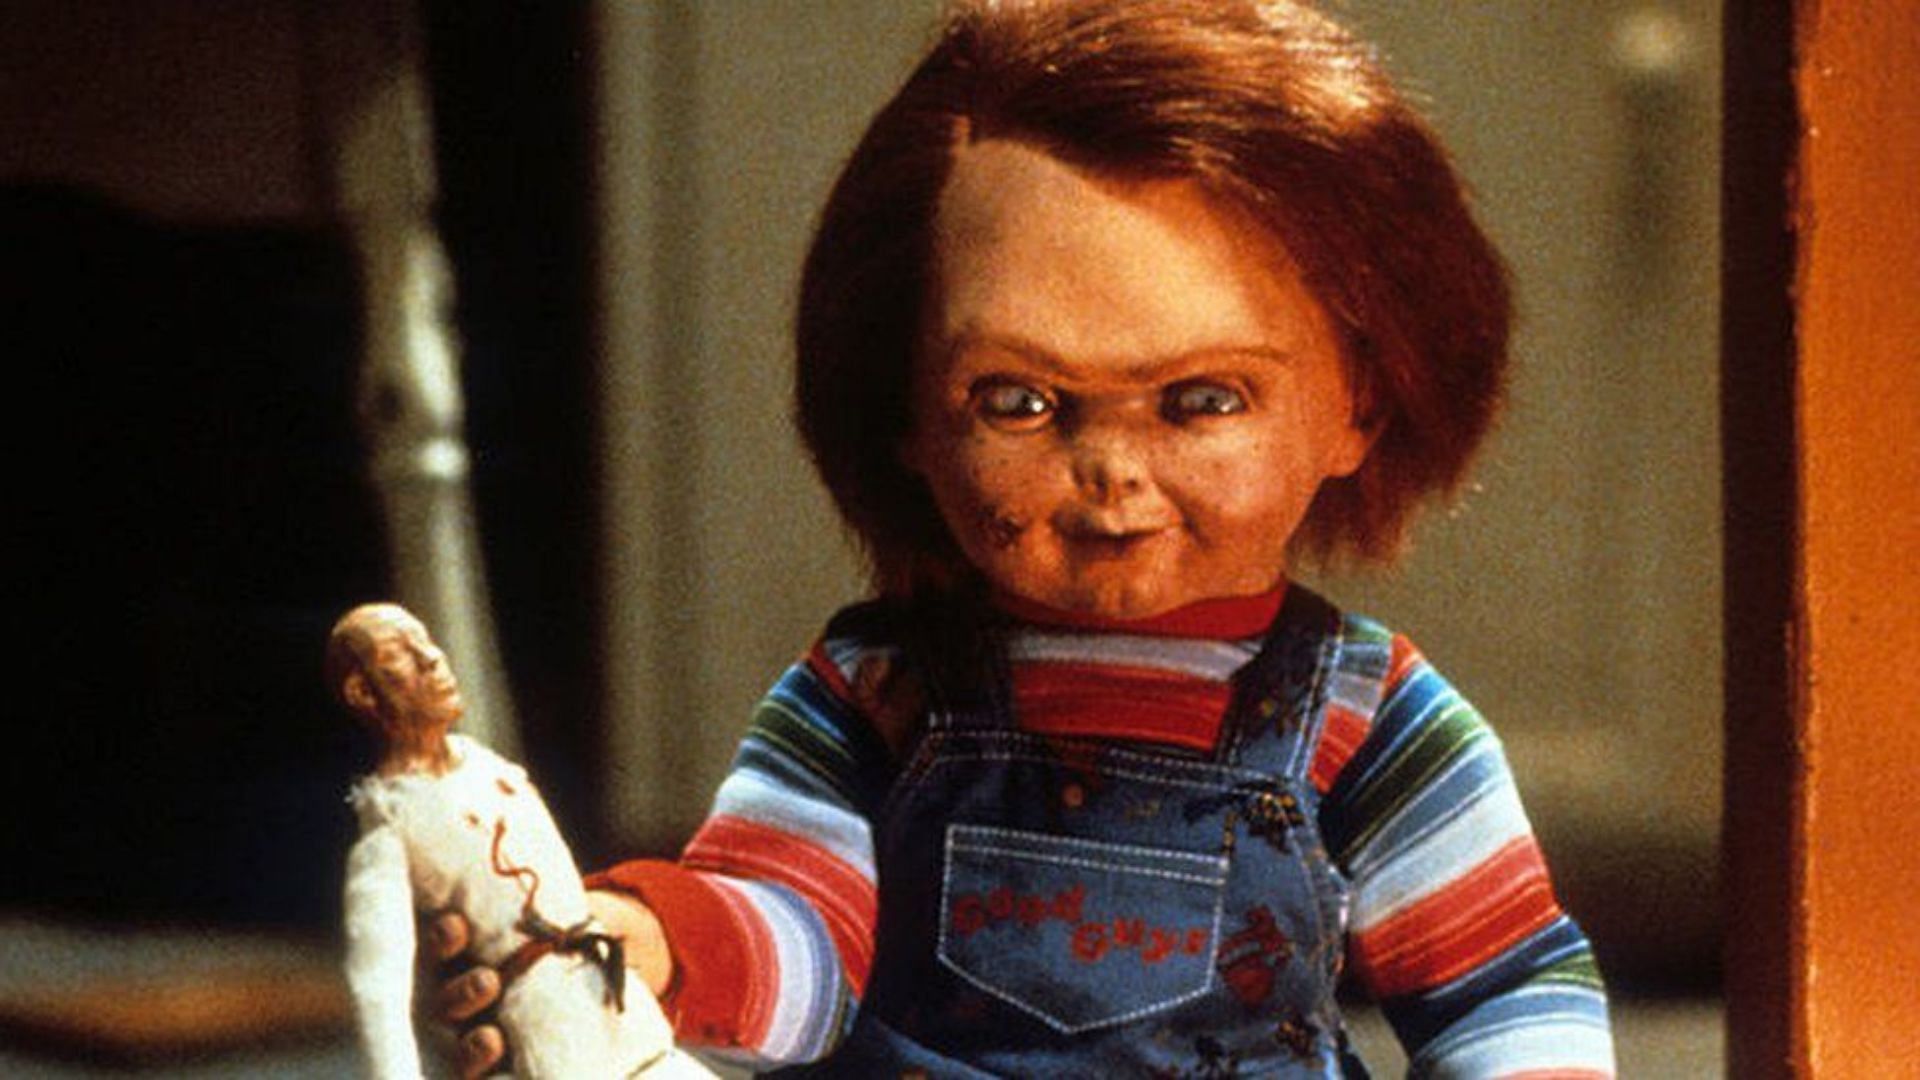 Chucky (Image via BBC)